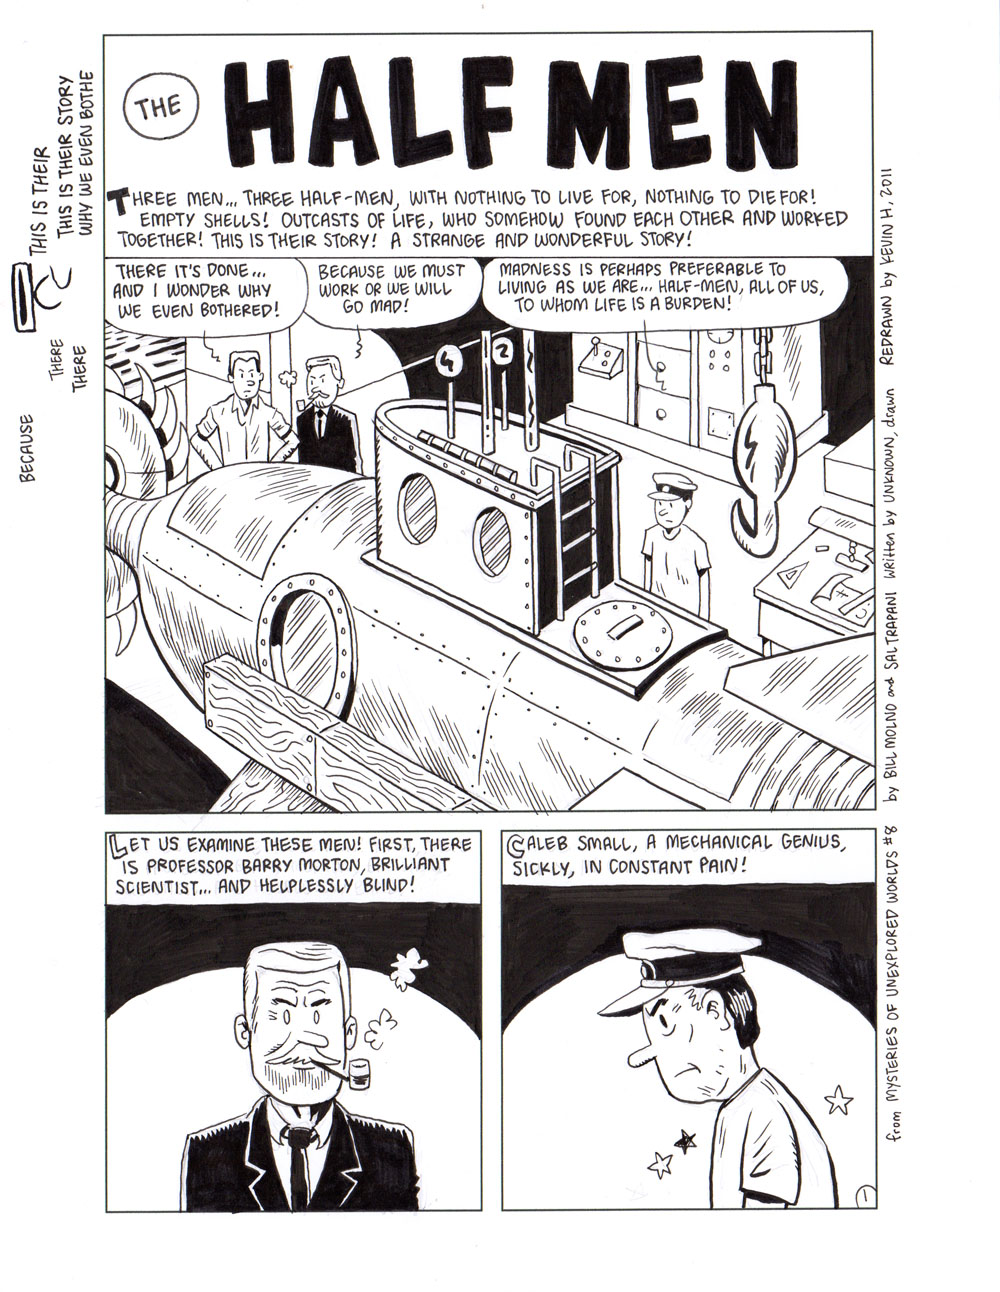 The Half Men page 1 of 7